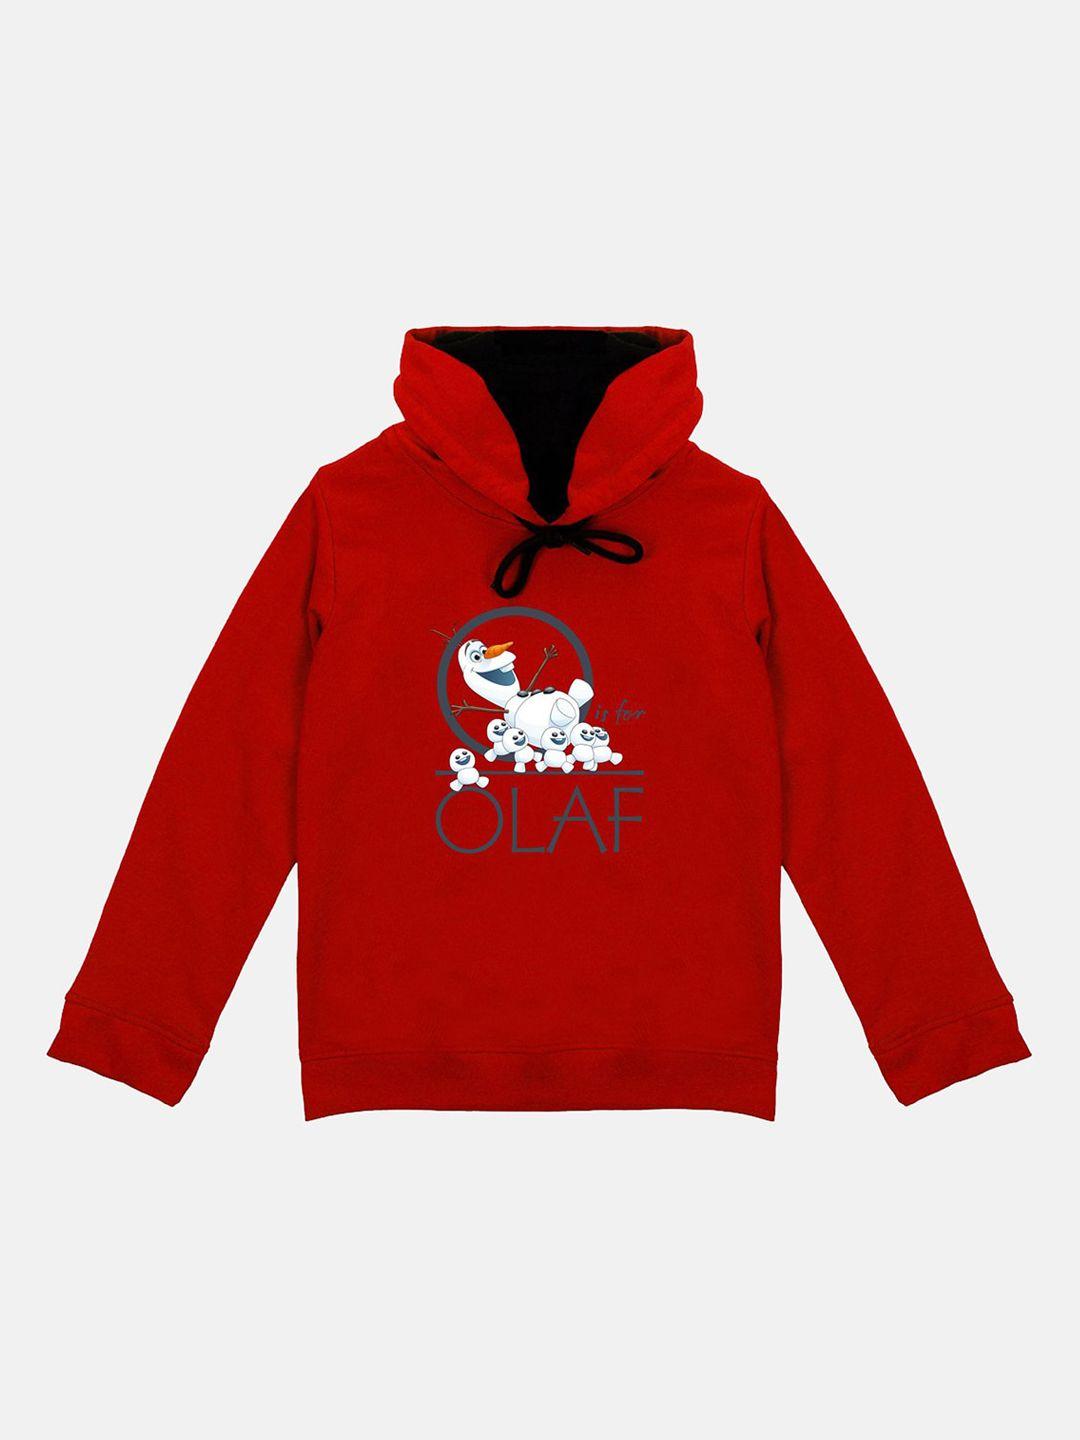 disney by wear your mind unisex kids red printed sweatshirt